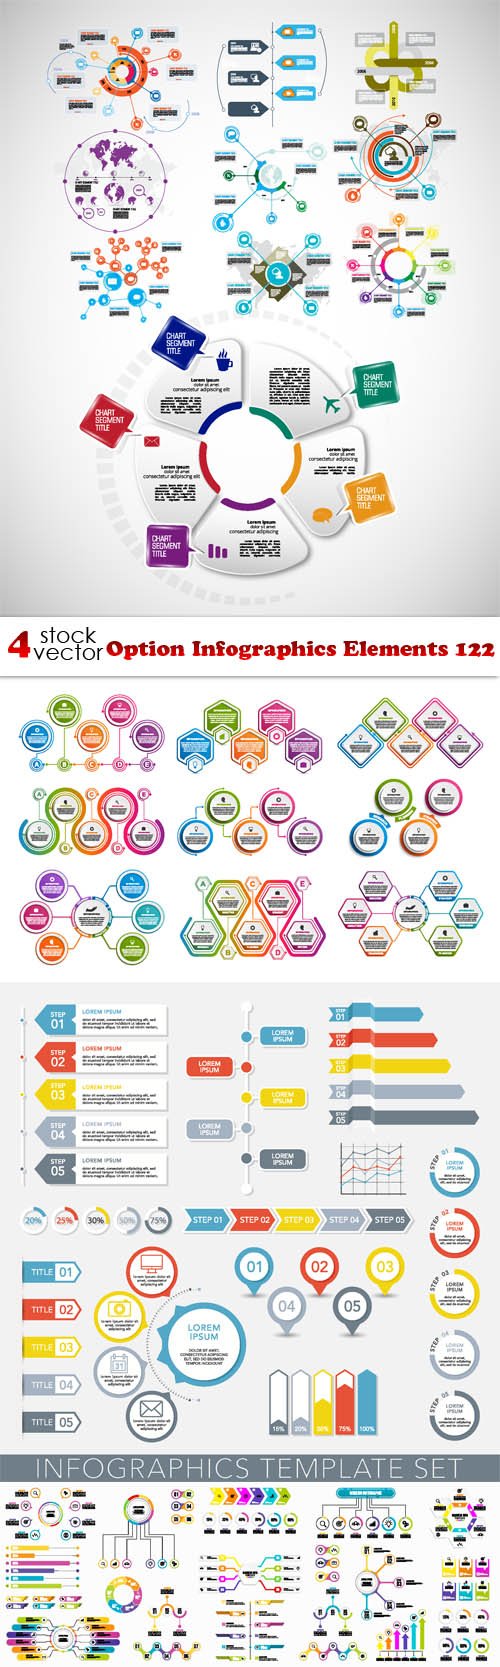 Vectors - Option Infographics Elements 122